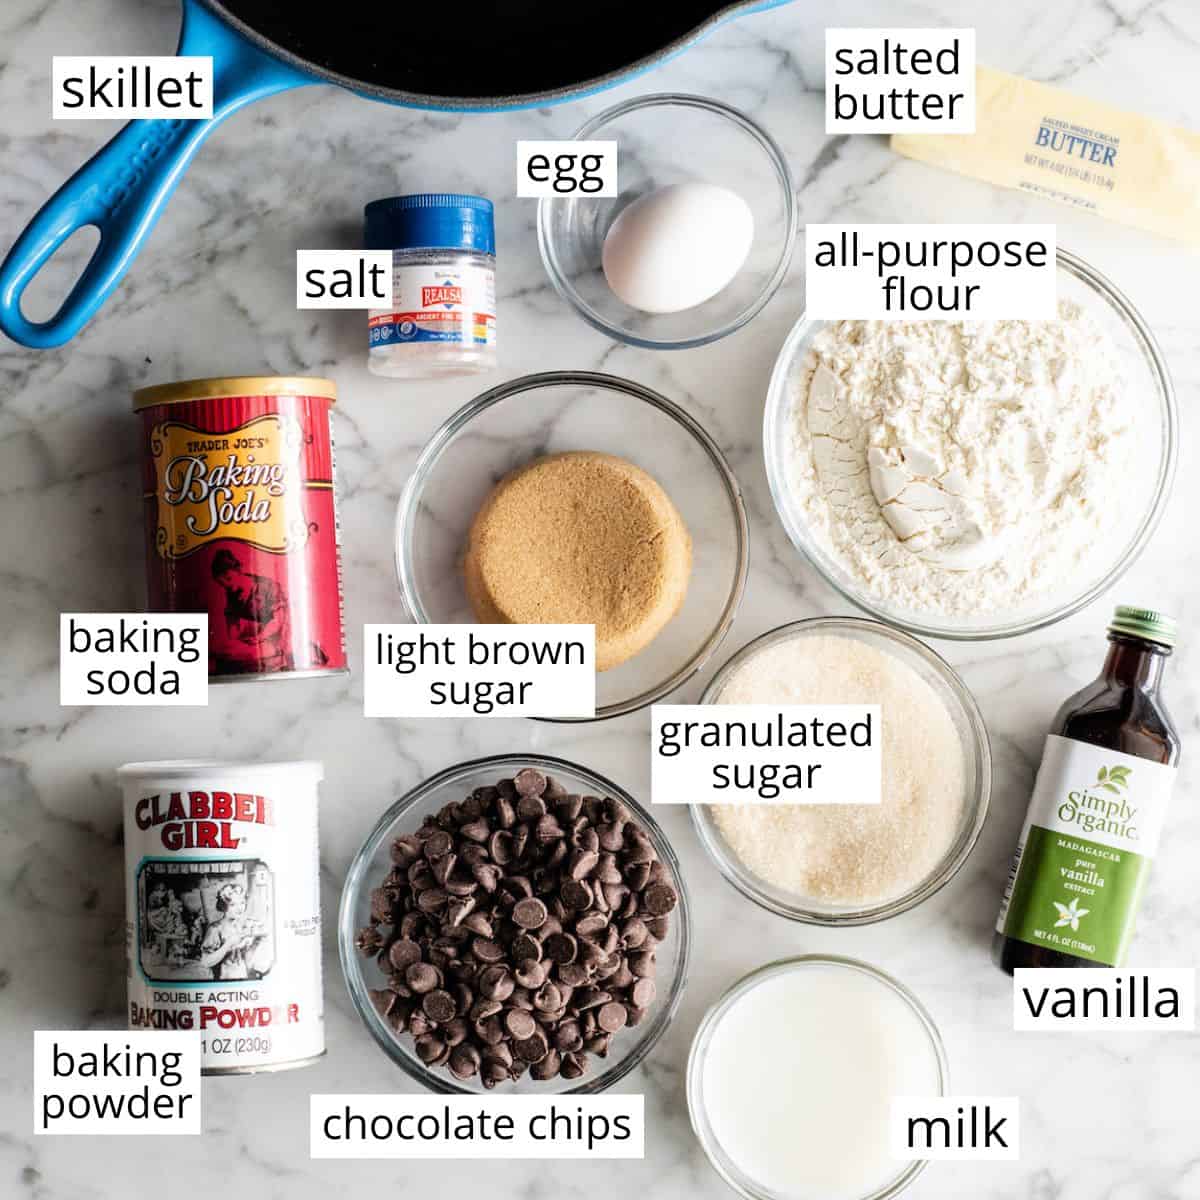 https://joyfoodsunshine.com/wp-content/uploads/2020/02/skillet-cookie-recipe-ingredients-labeled.jpg